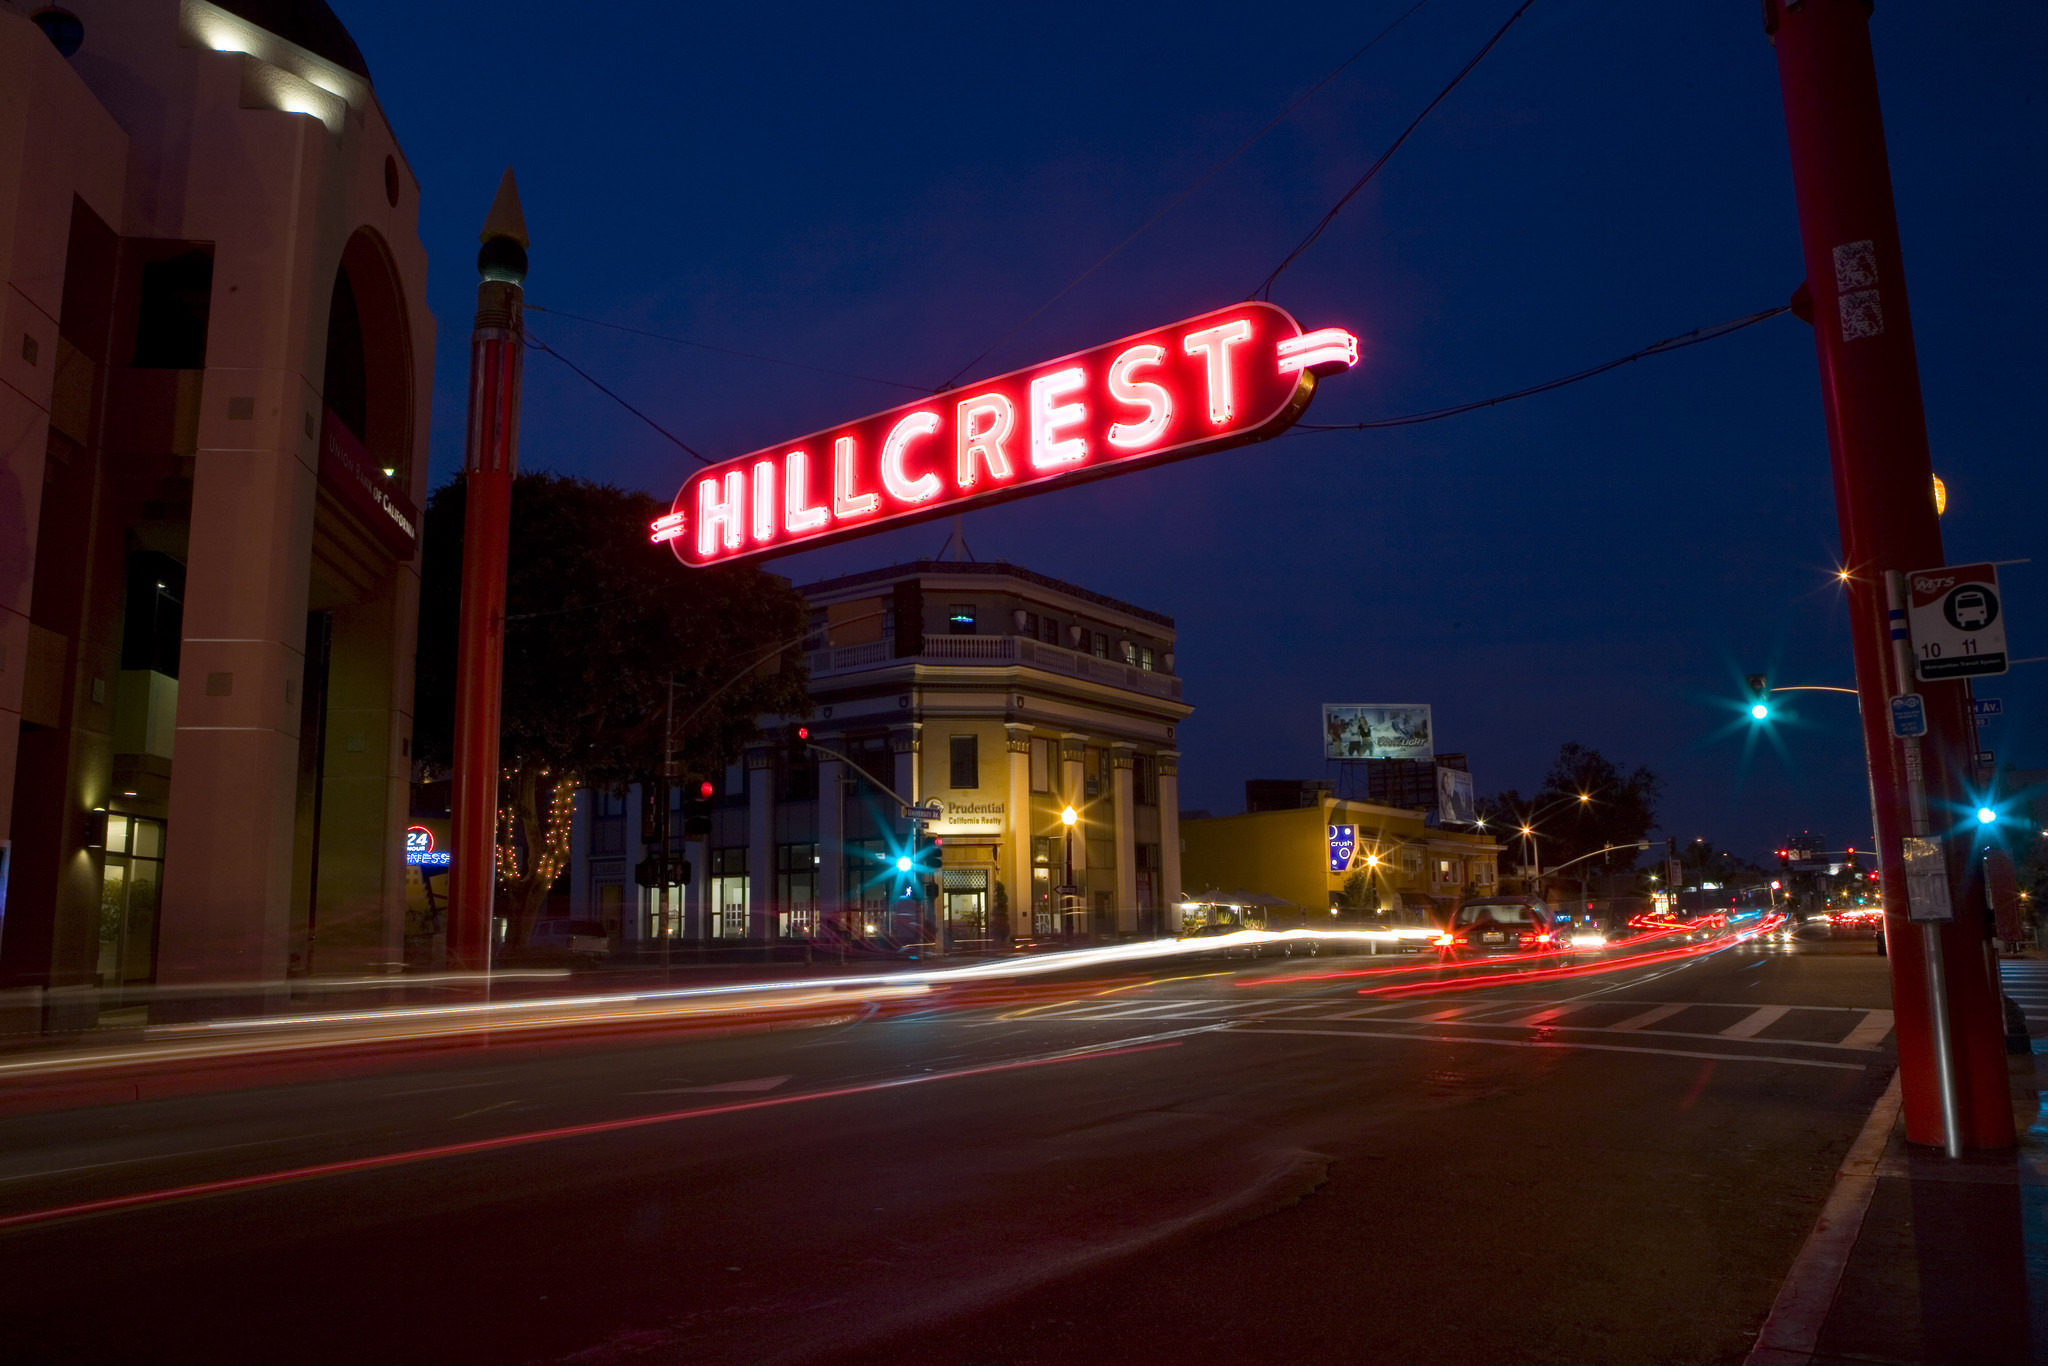 Mission Hills/ Hillcrest